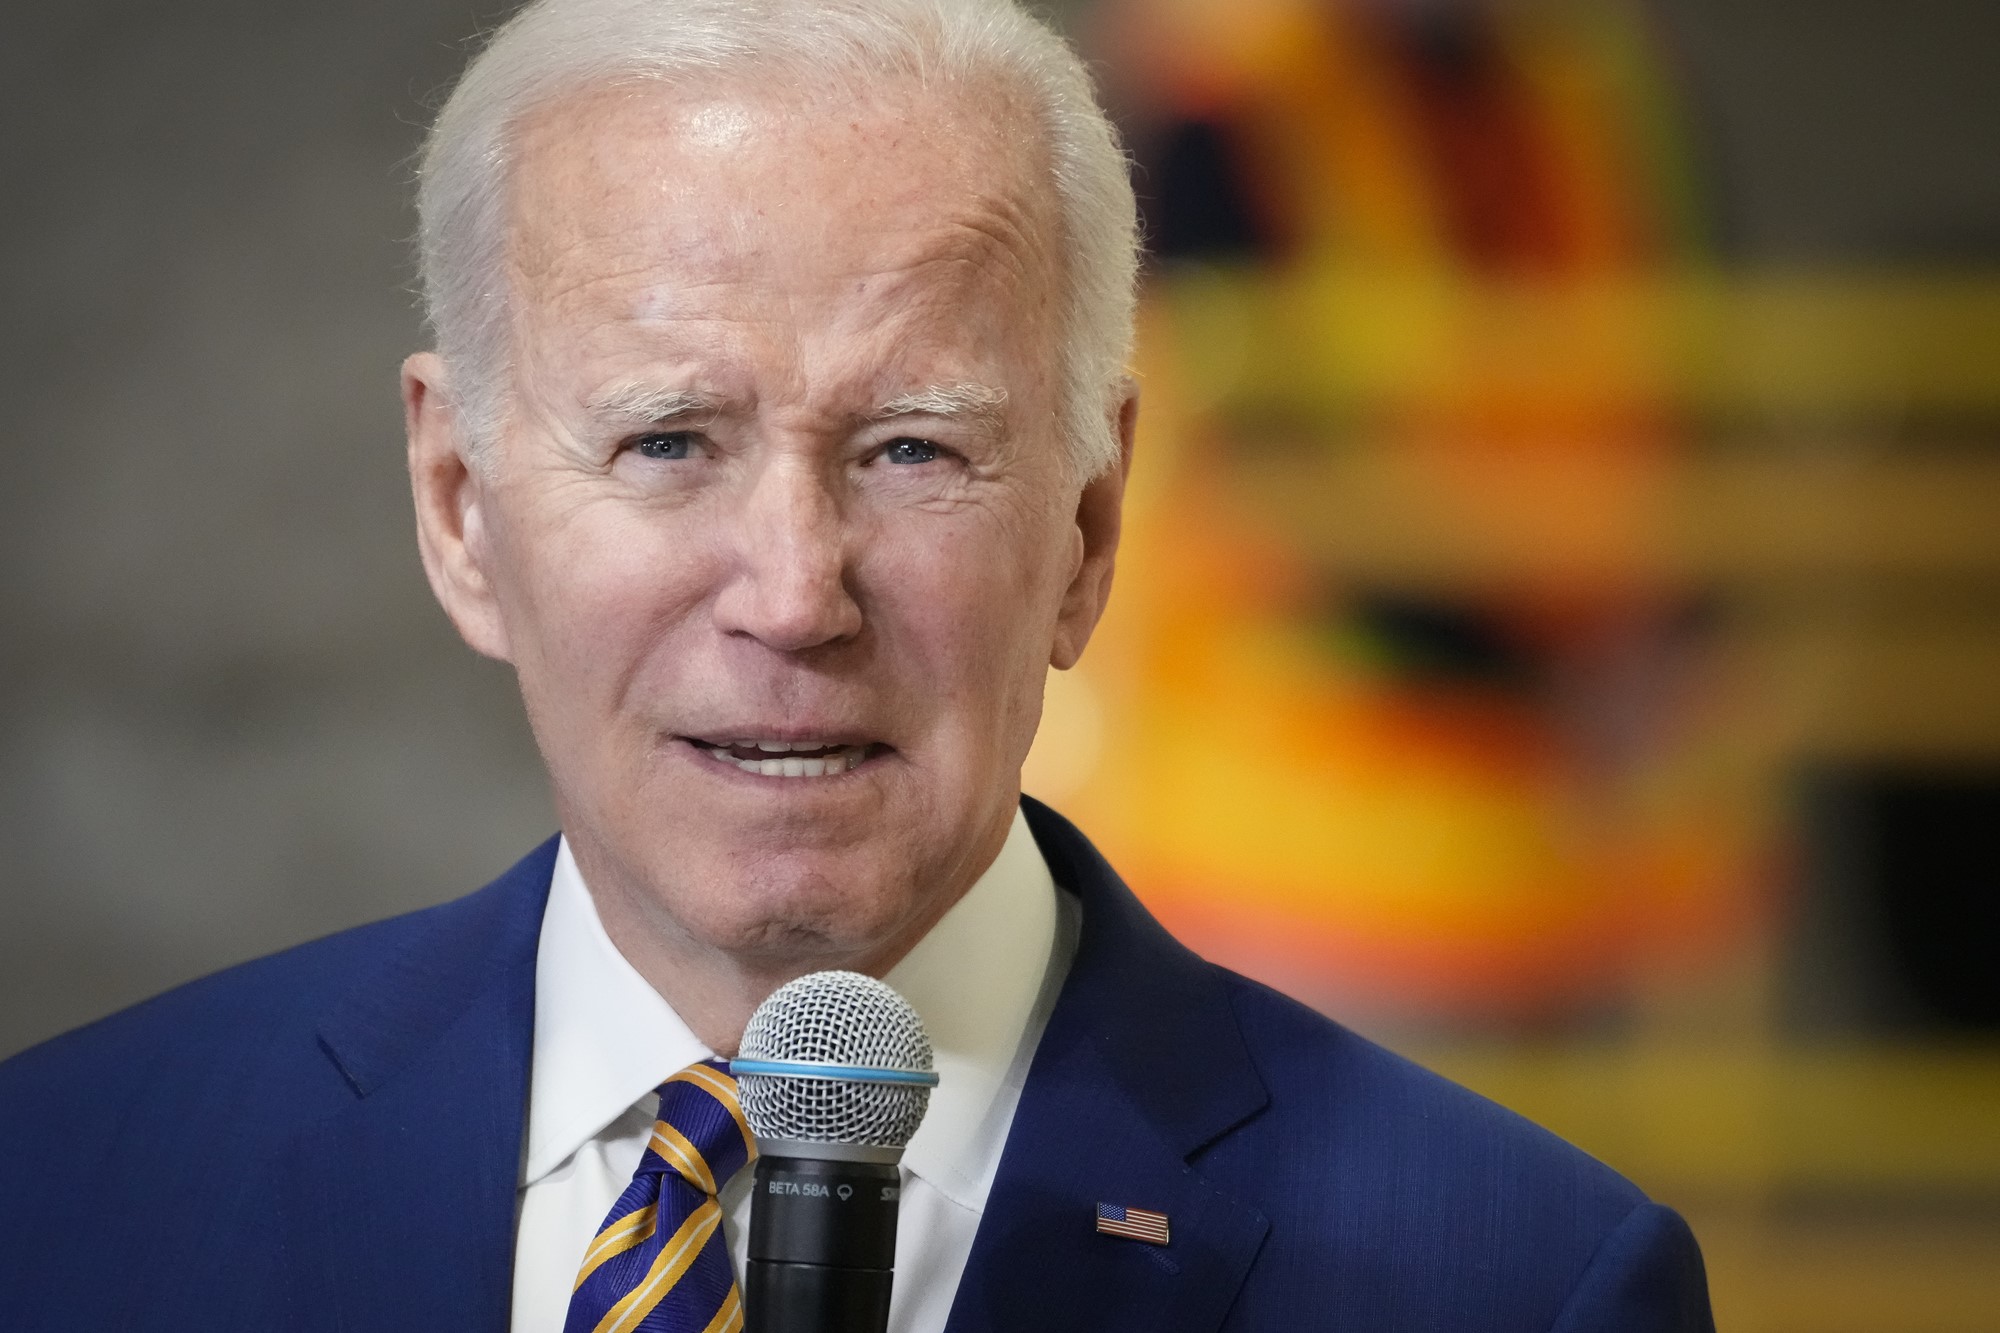 Joe Biden wears a blue suit and talks into a microphone.